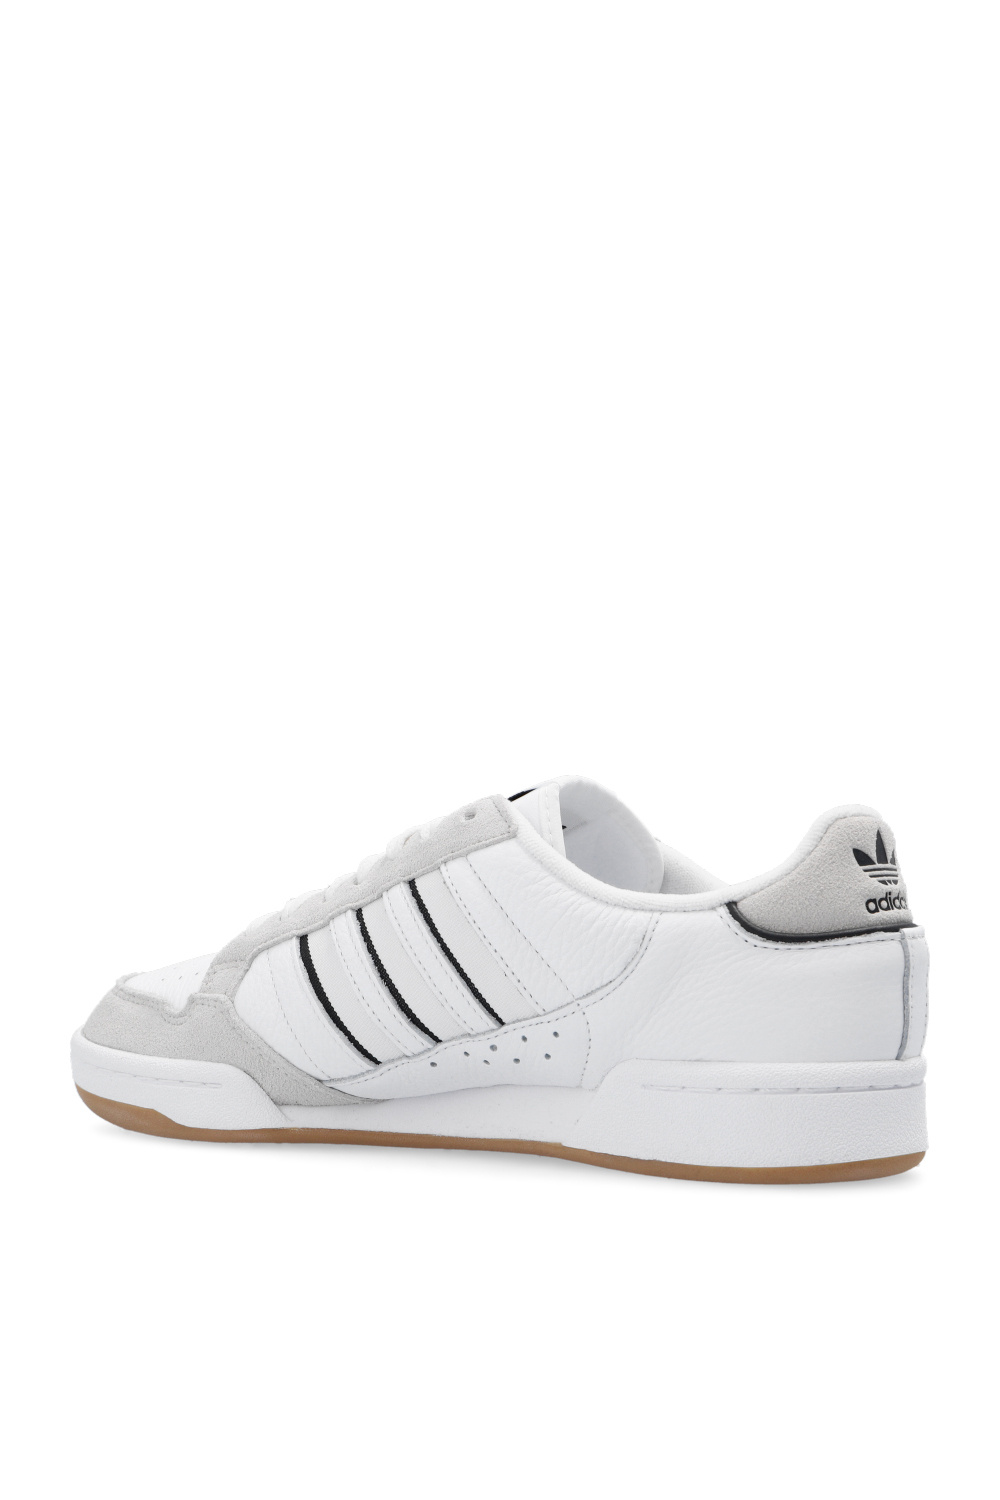 Beige 'Continental 80 Stripes' sneakers ADIDAS Originals - StclaircomoShops  Germany - adidas Originals 2971